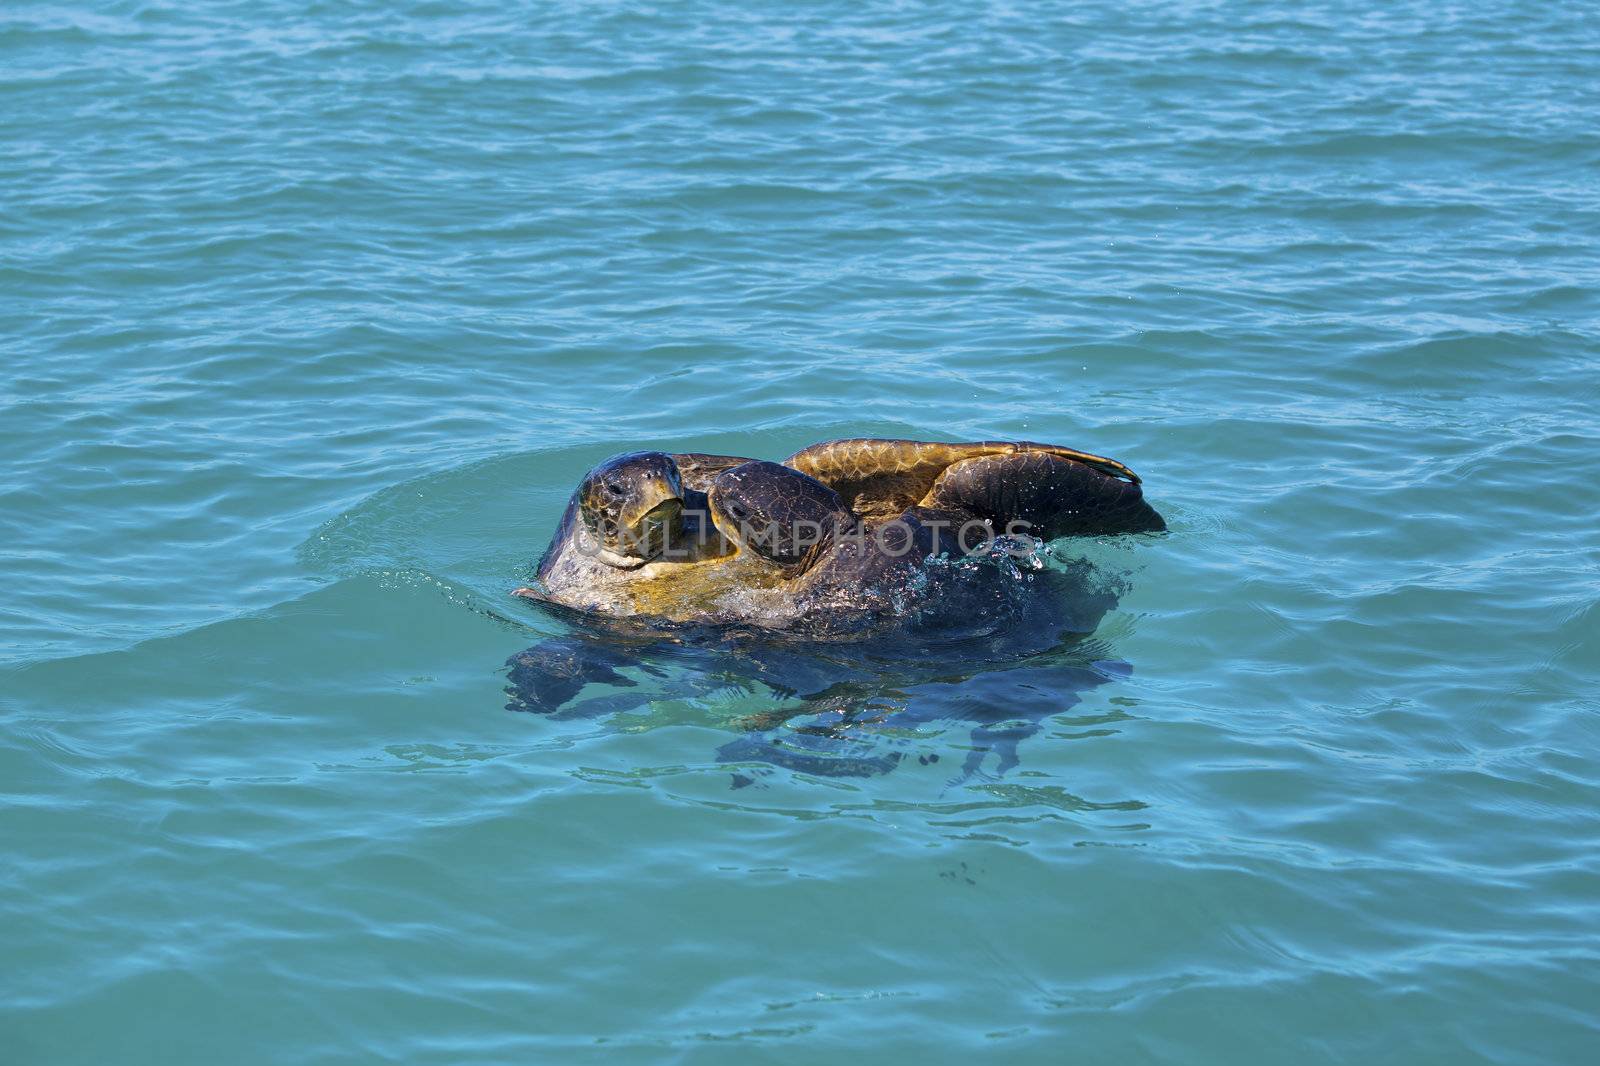 Mating sea turtles by kjorgen